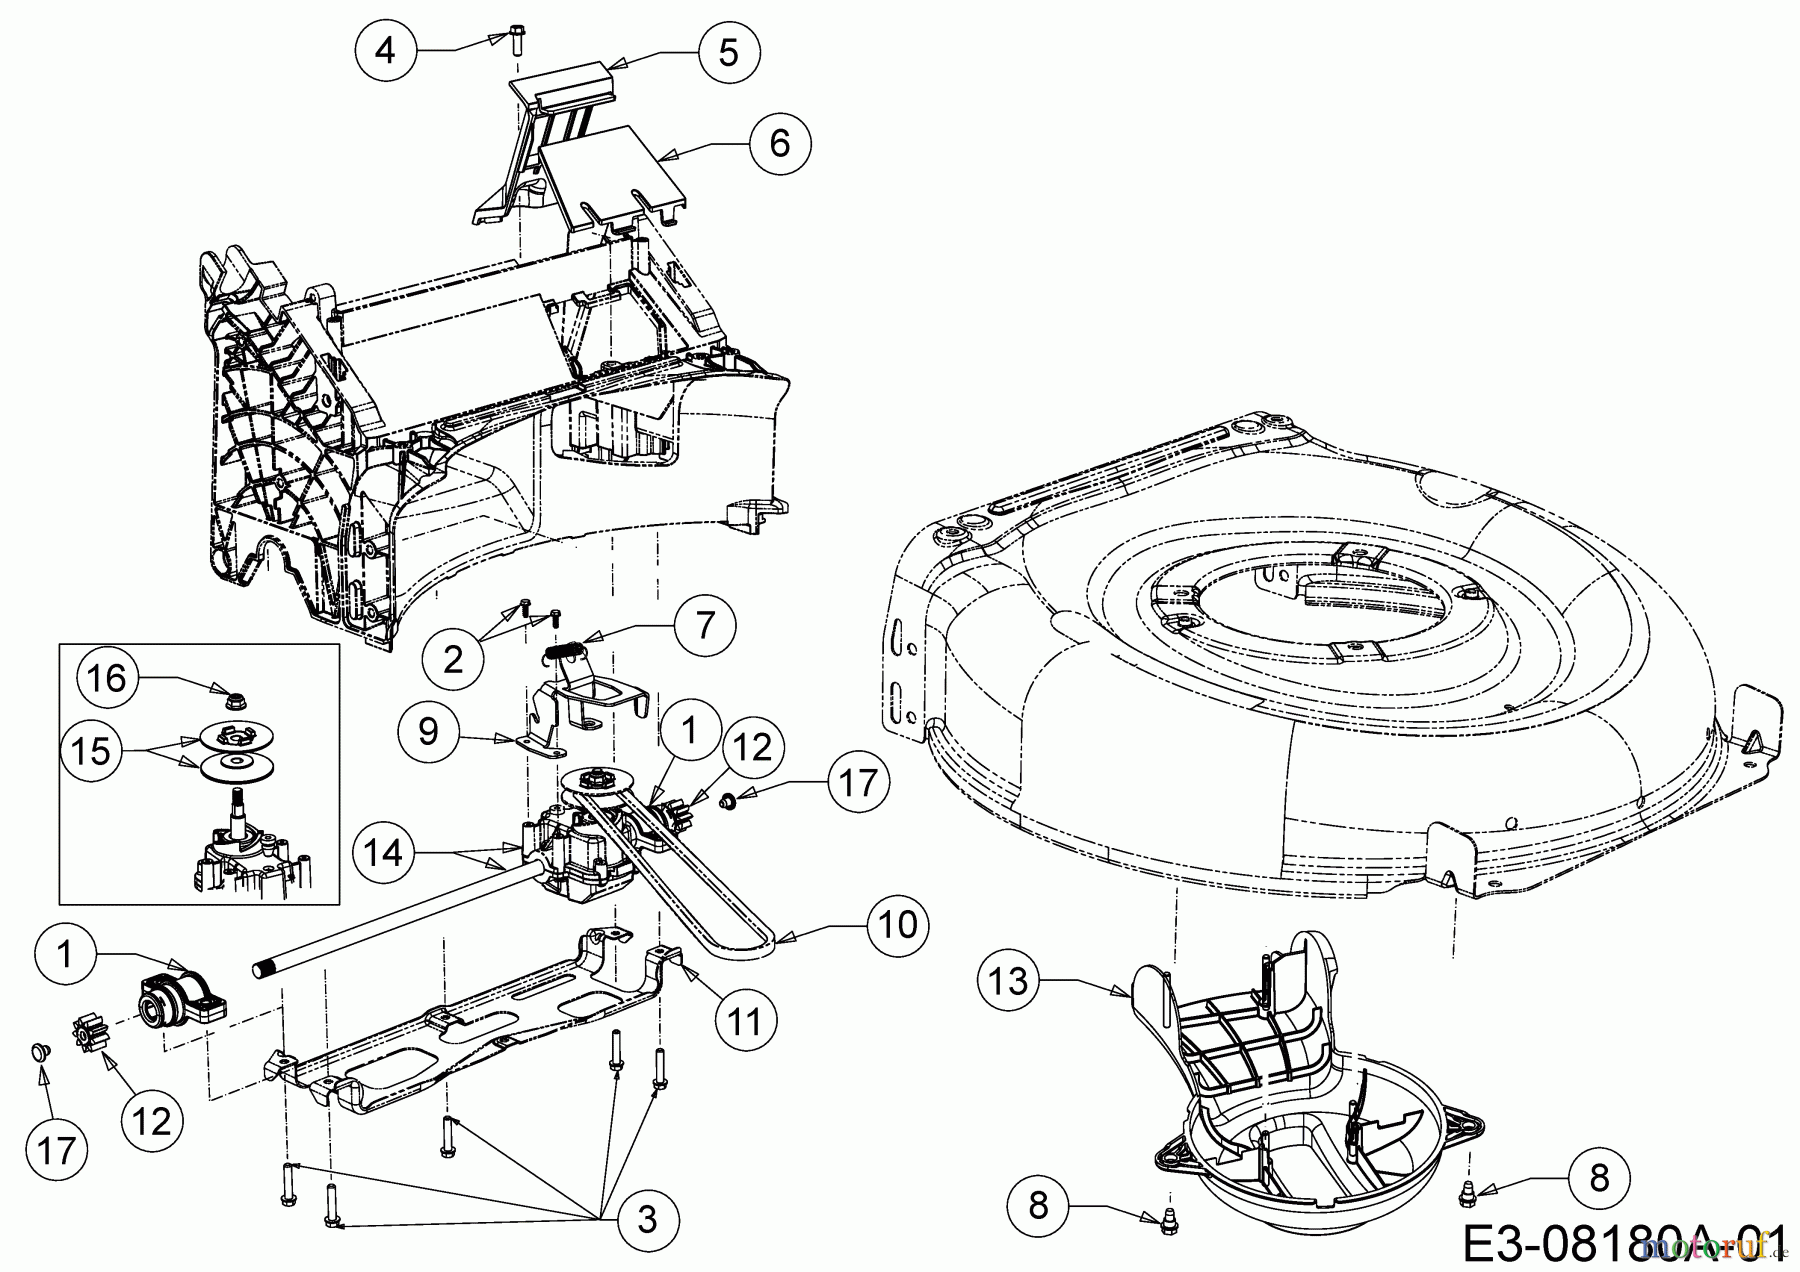  Mastercut Motormäher mit Antrieb MC 46 S 12A-TAM8659  (2013) Getriebe, Keilriemen